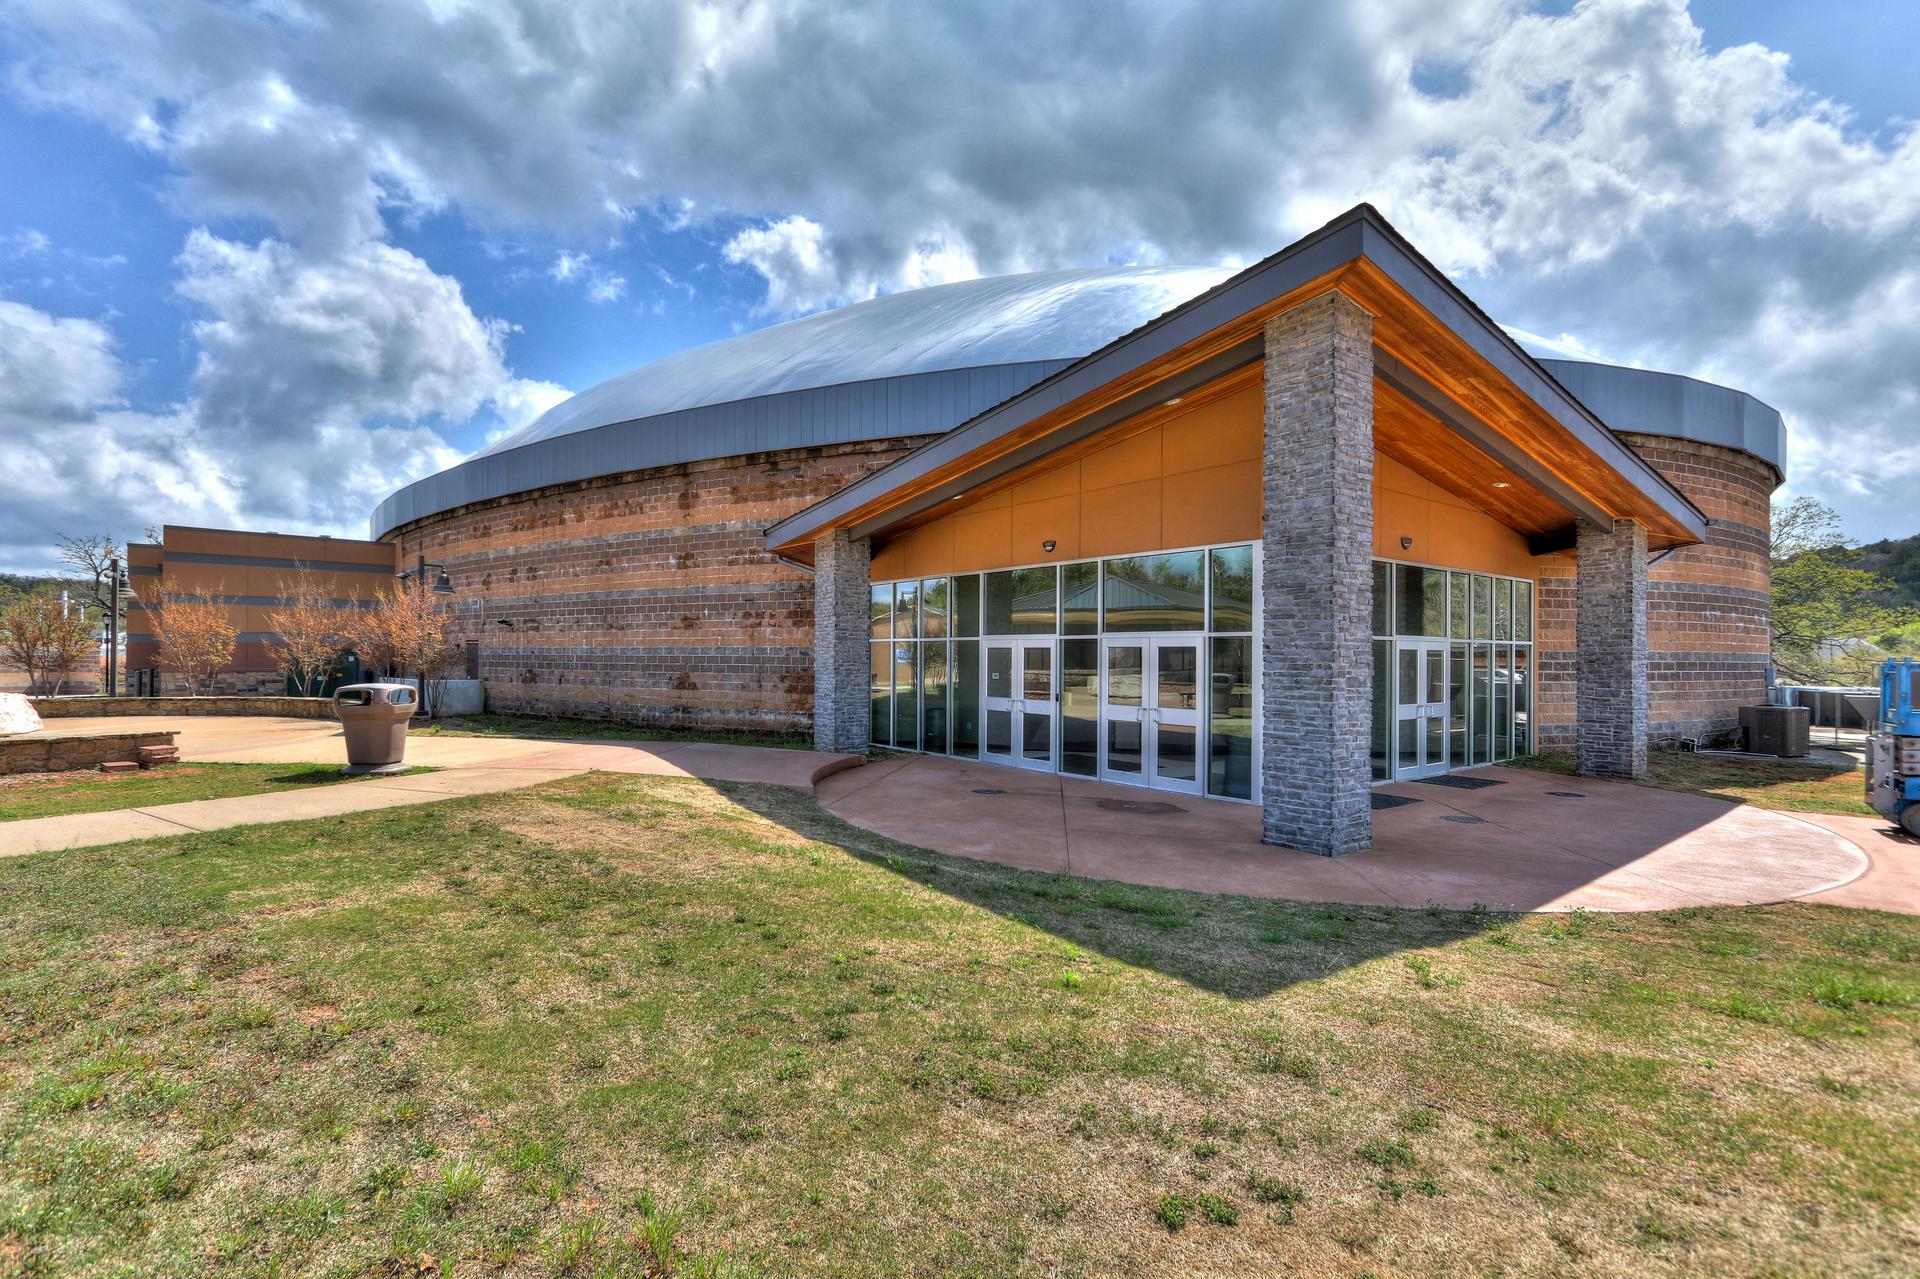 Mathena Family Events Center, a concrete dome convention center in Oklahoma